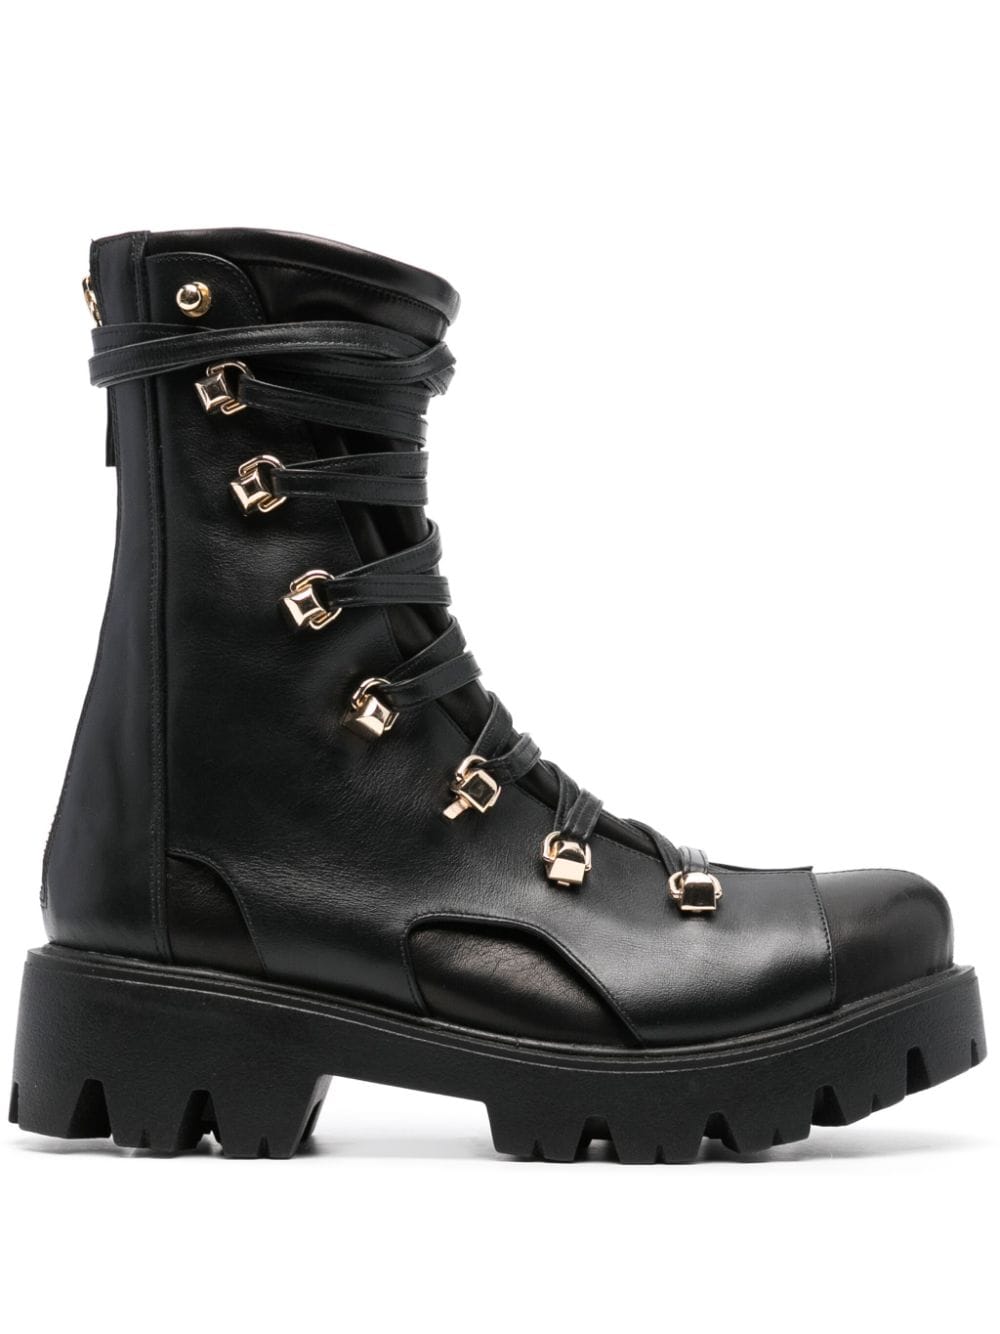 HARDOT Hord leather ankle boots - Black von HARDOT